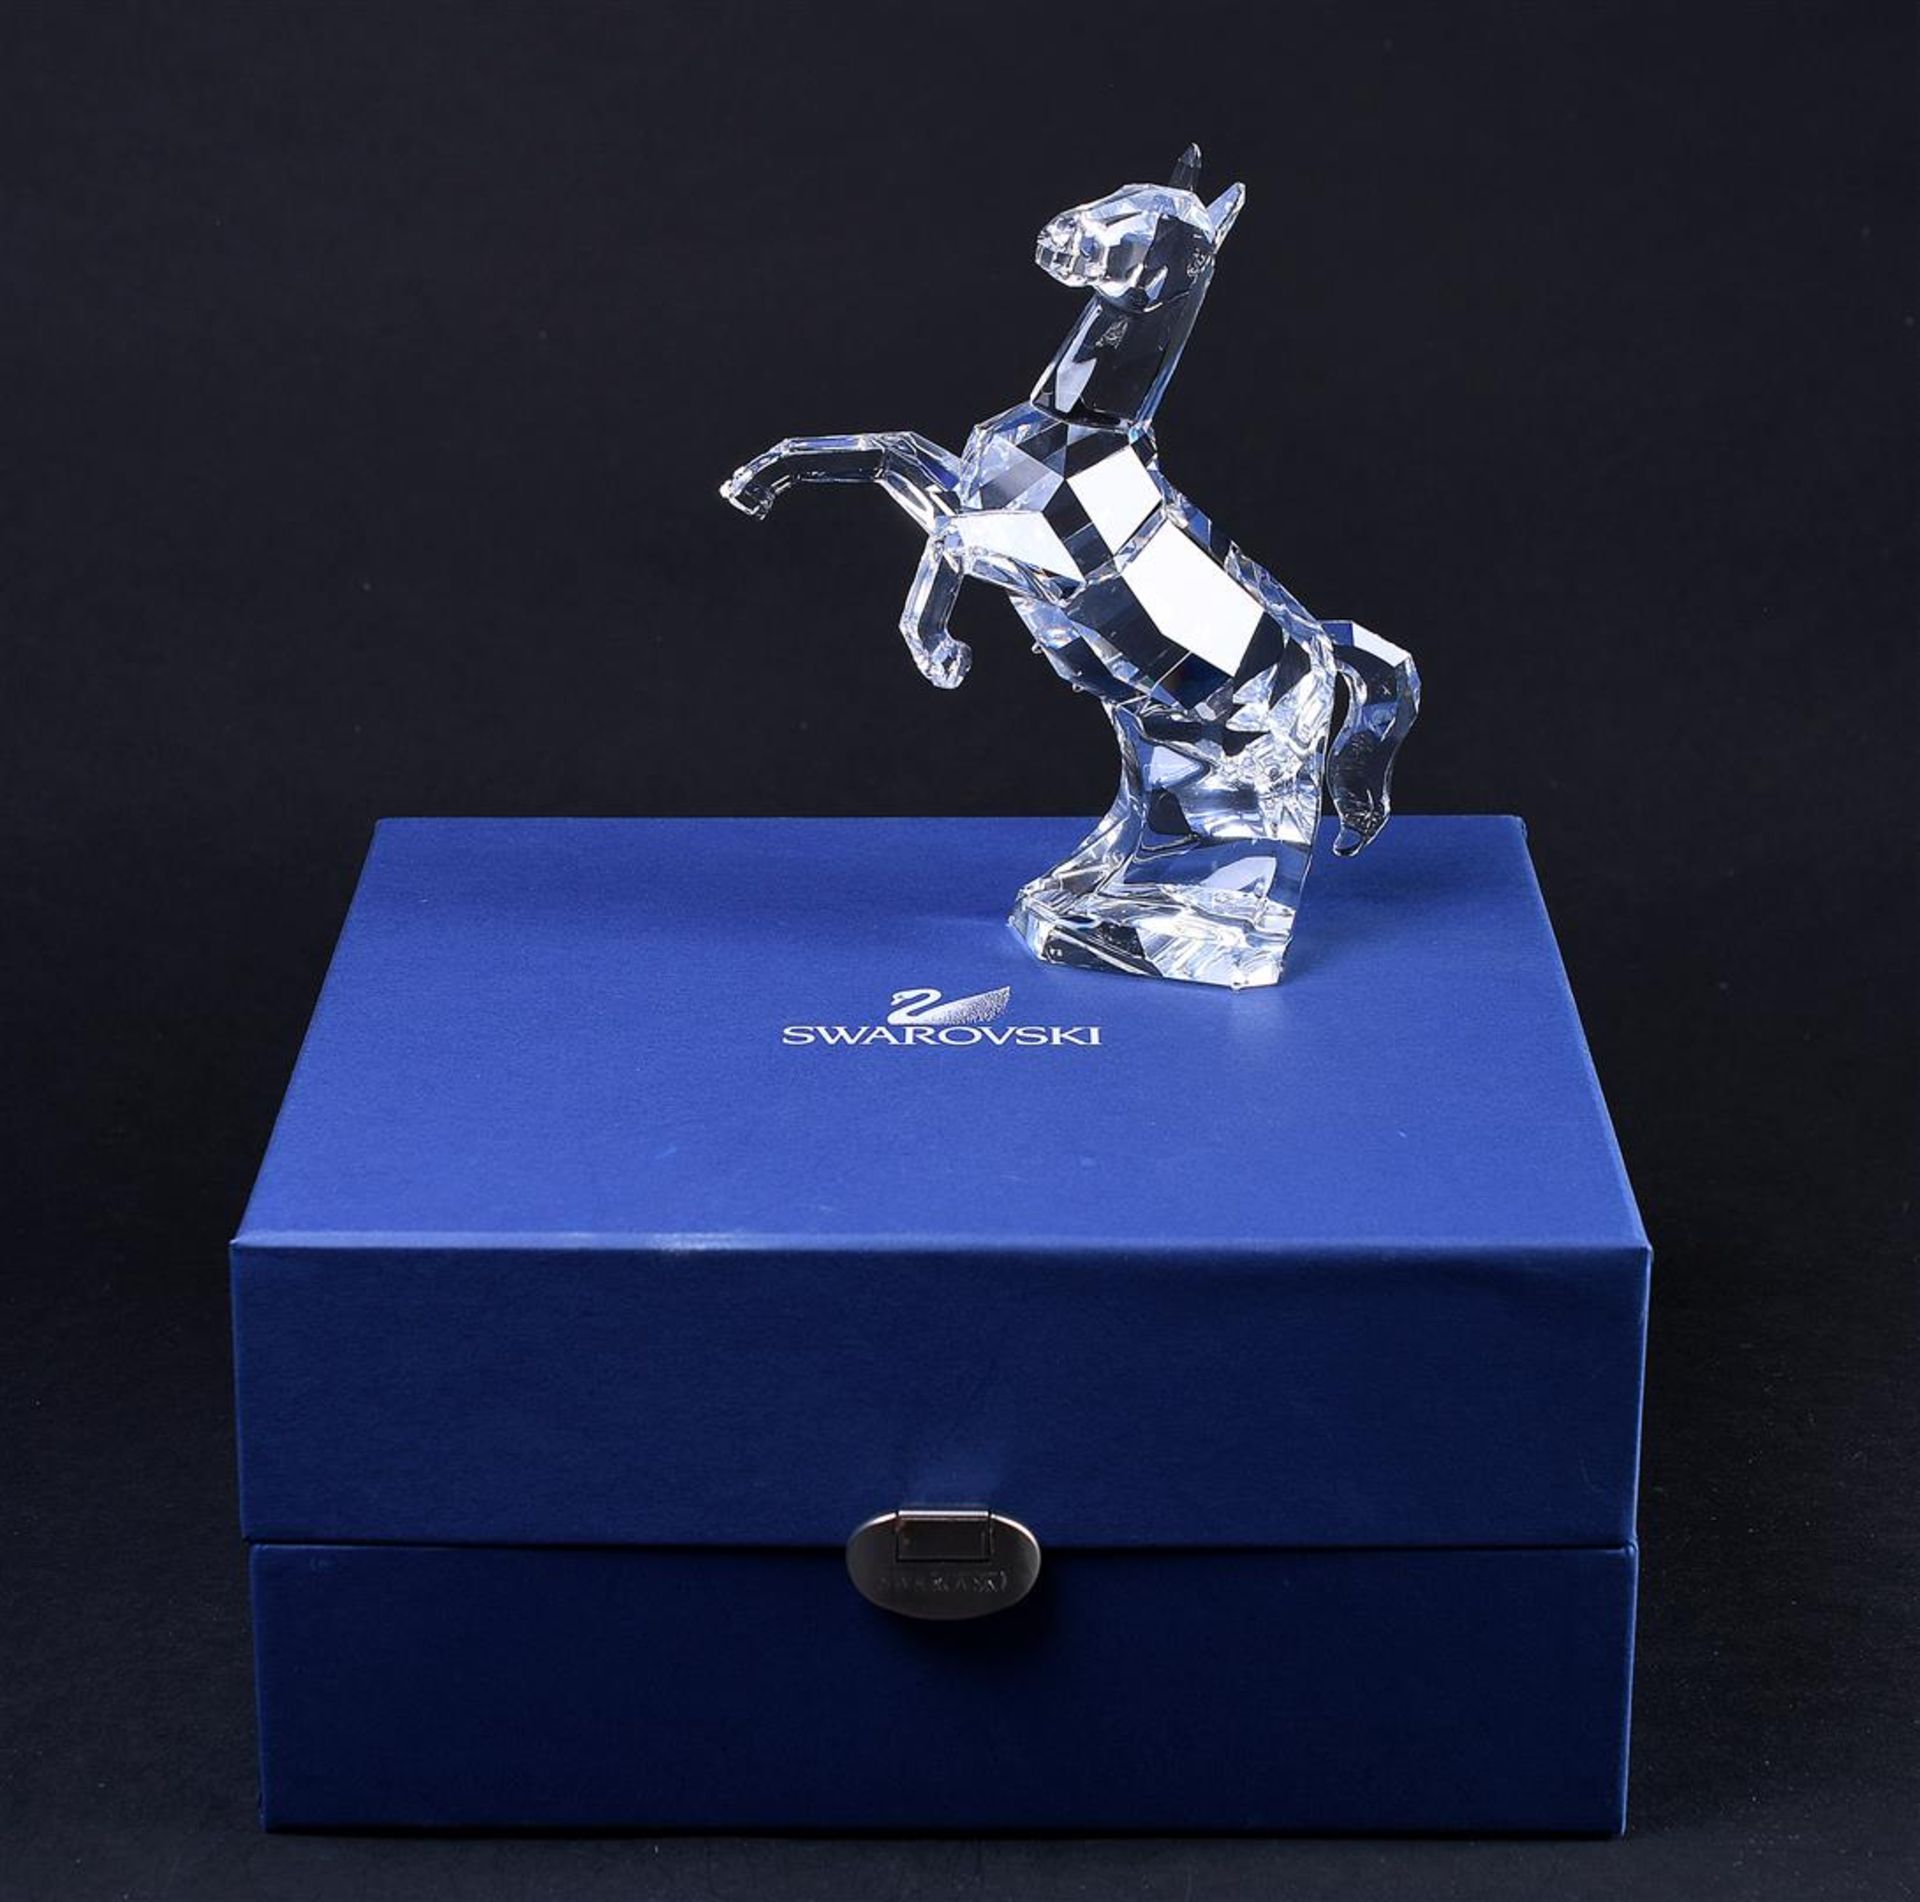 Swarovski, horse, Year of issue 2004, 660218. Includes original box.
H. 13,8 cm. - Image 4 of 4